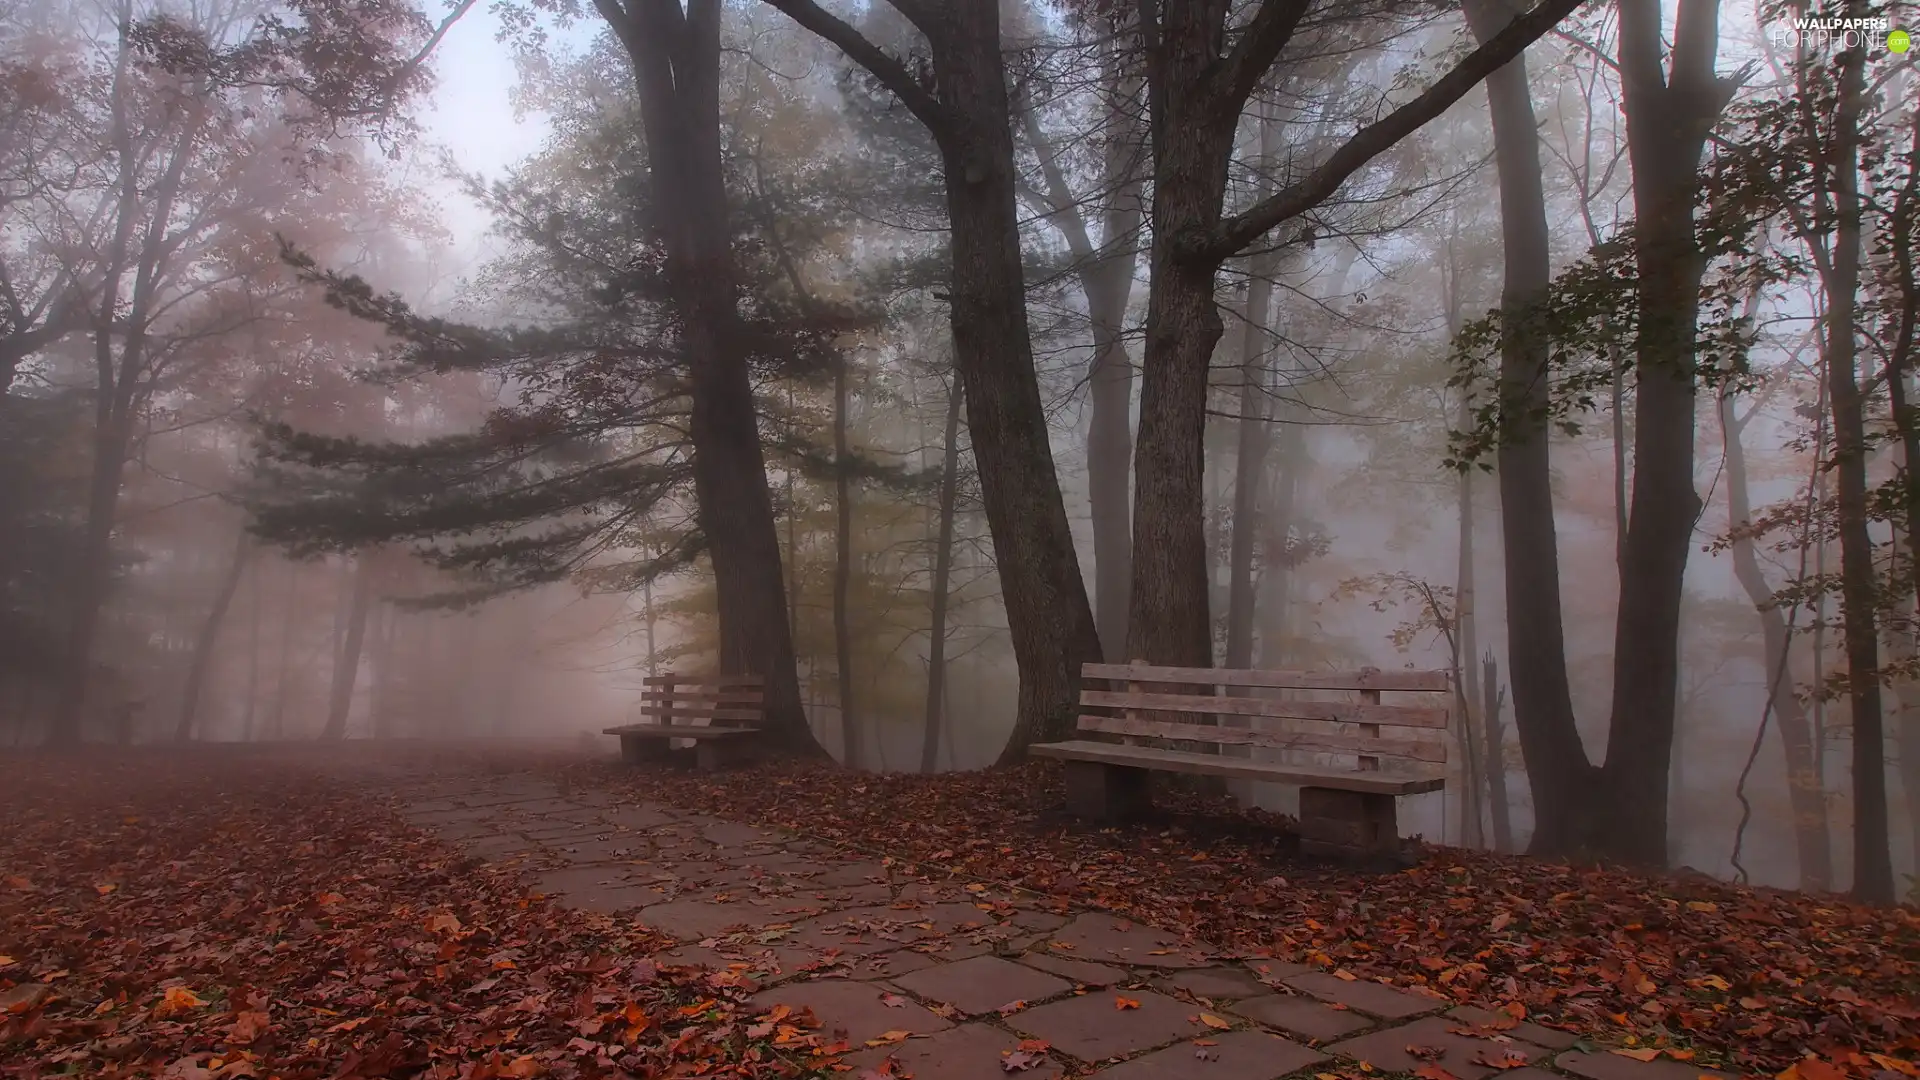 trees, viewes, Leaf, Fog, fallen, Park, autumn, bench